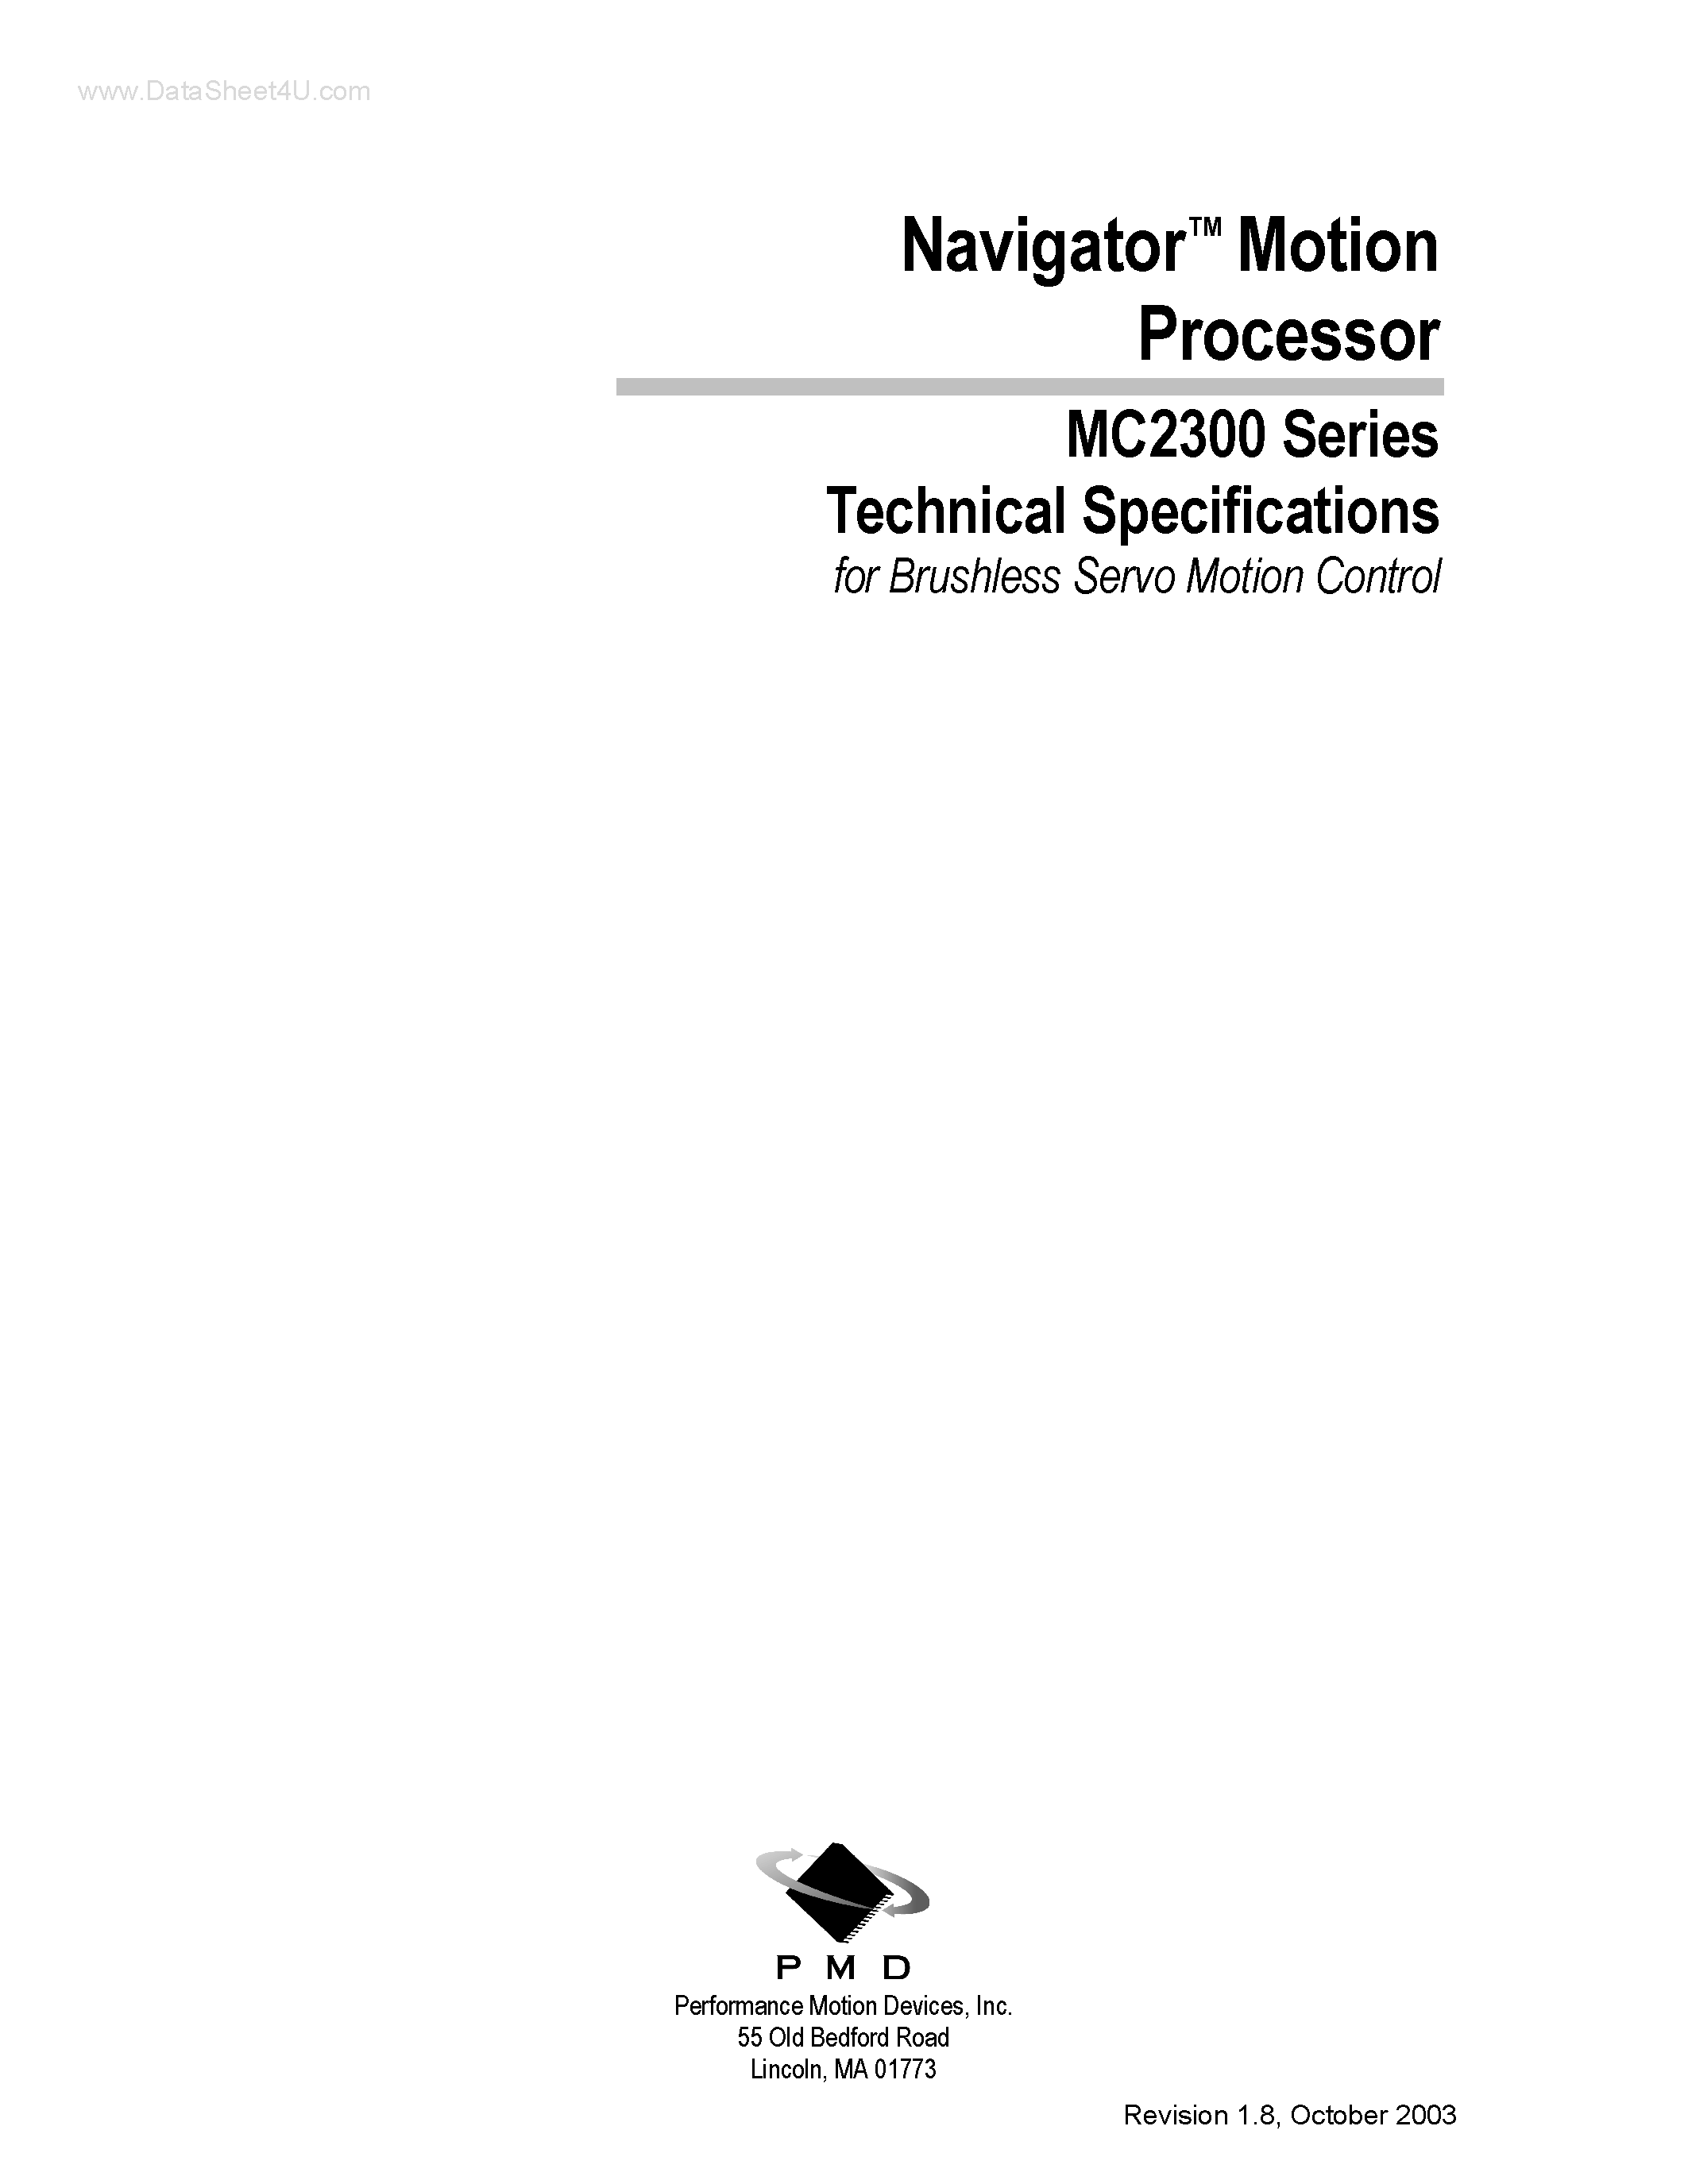 Даташит MC2300 - Navigator Motion Processor страница 1